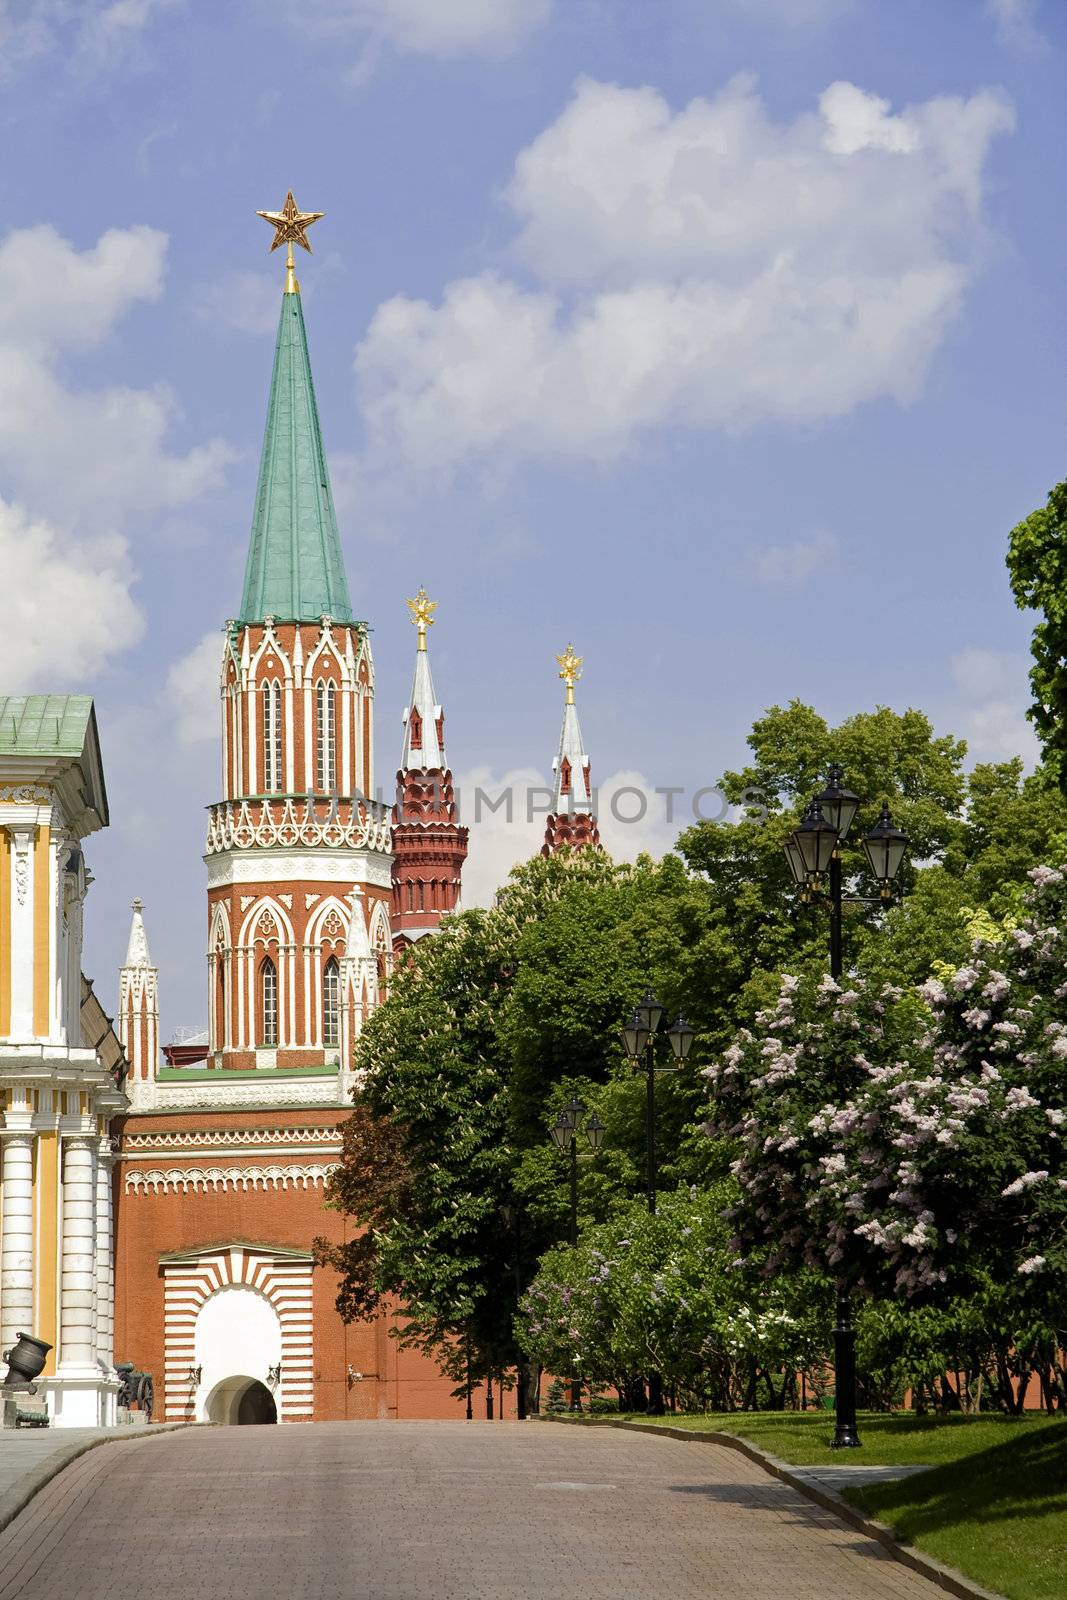 The Saviour (Spasskaya ) Tower (Frolovskaya) (Moscow Kremlin, Ru by Sazonoff